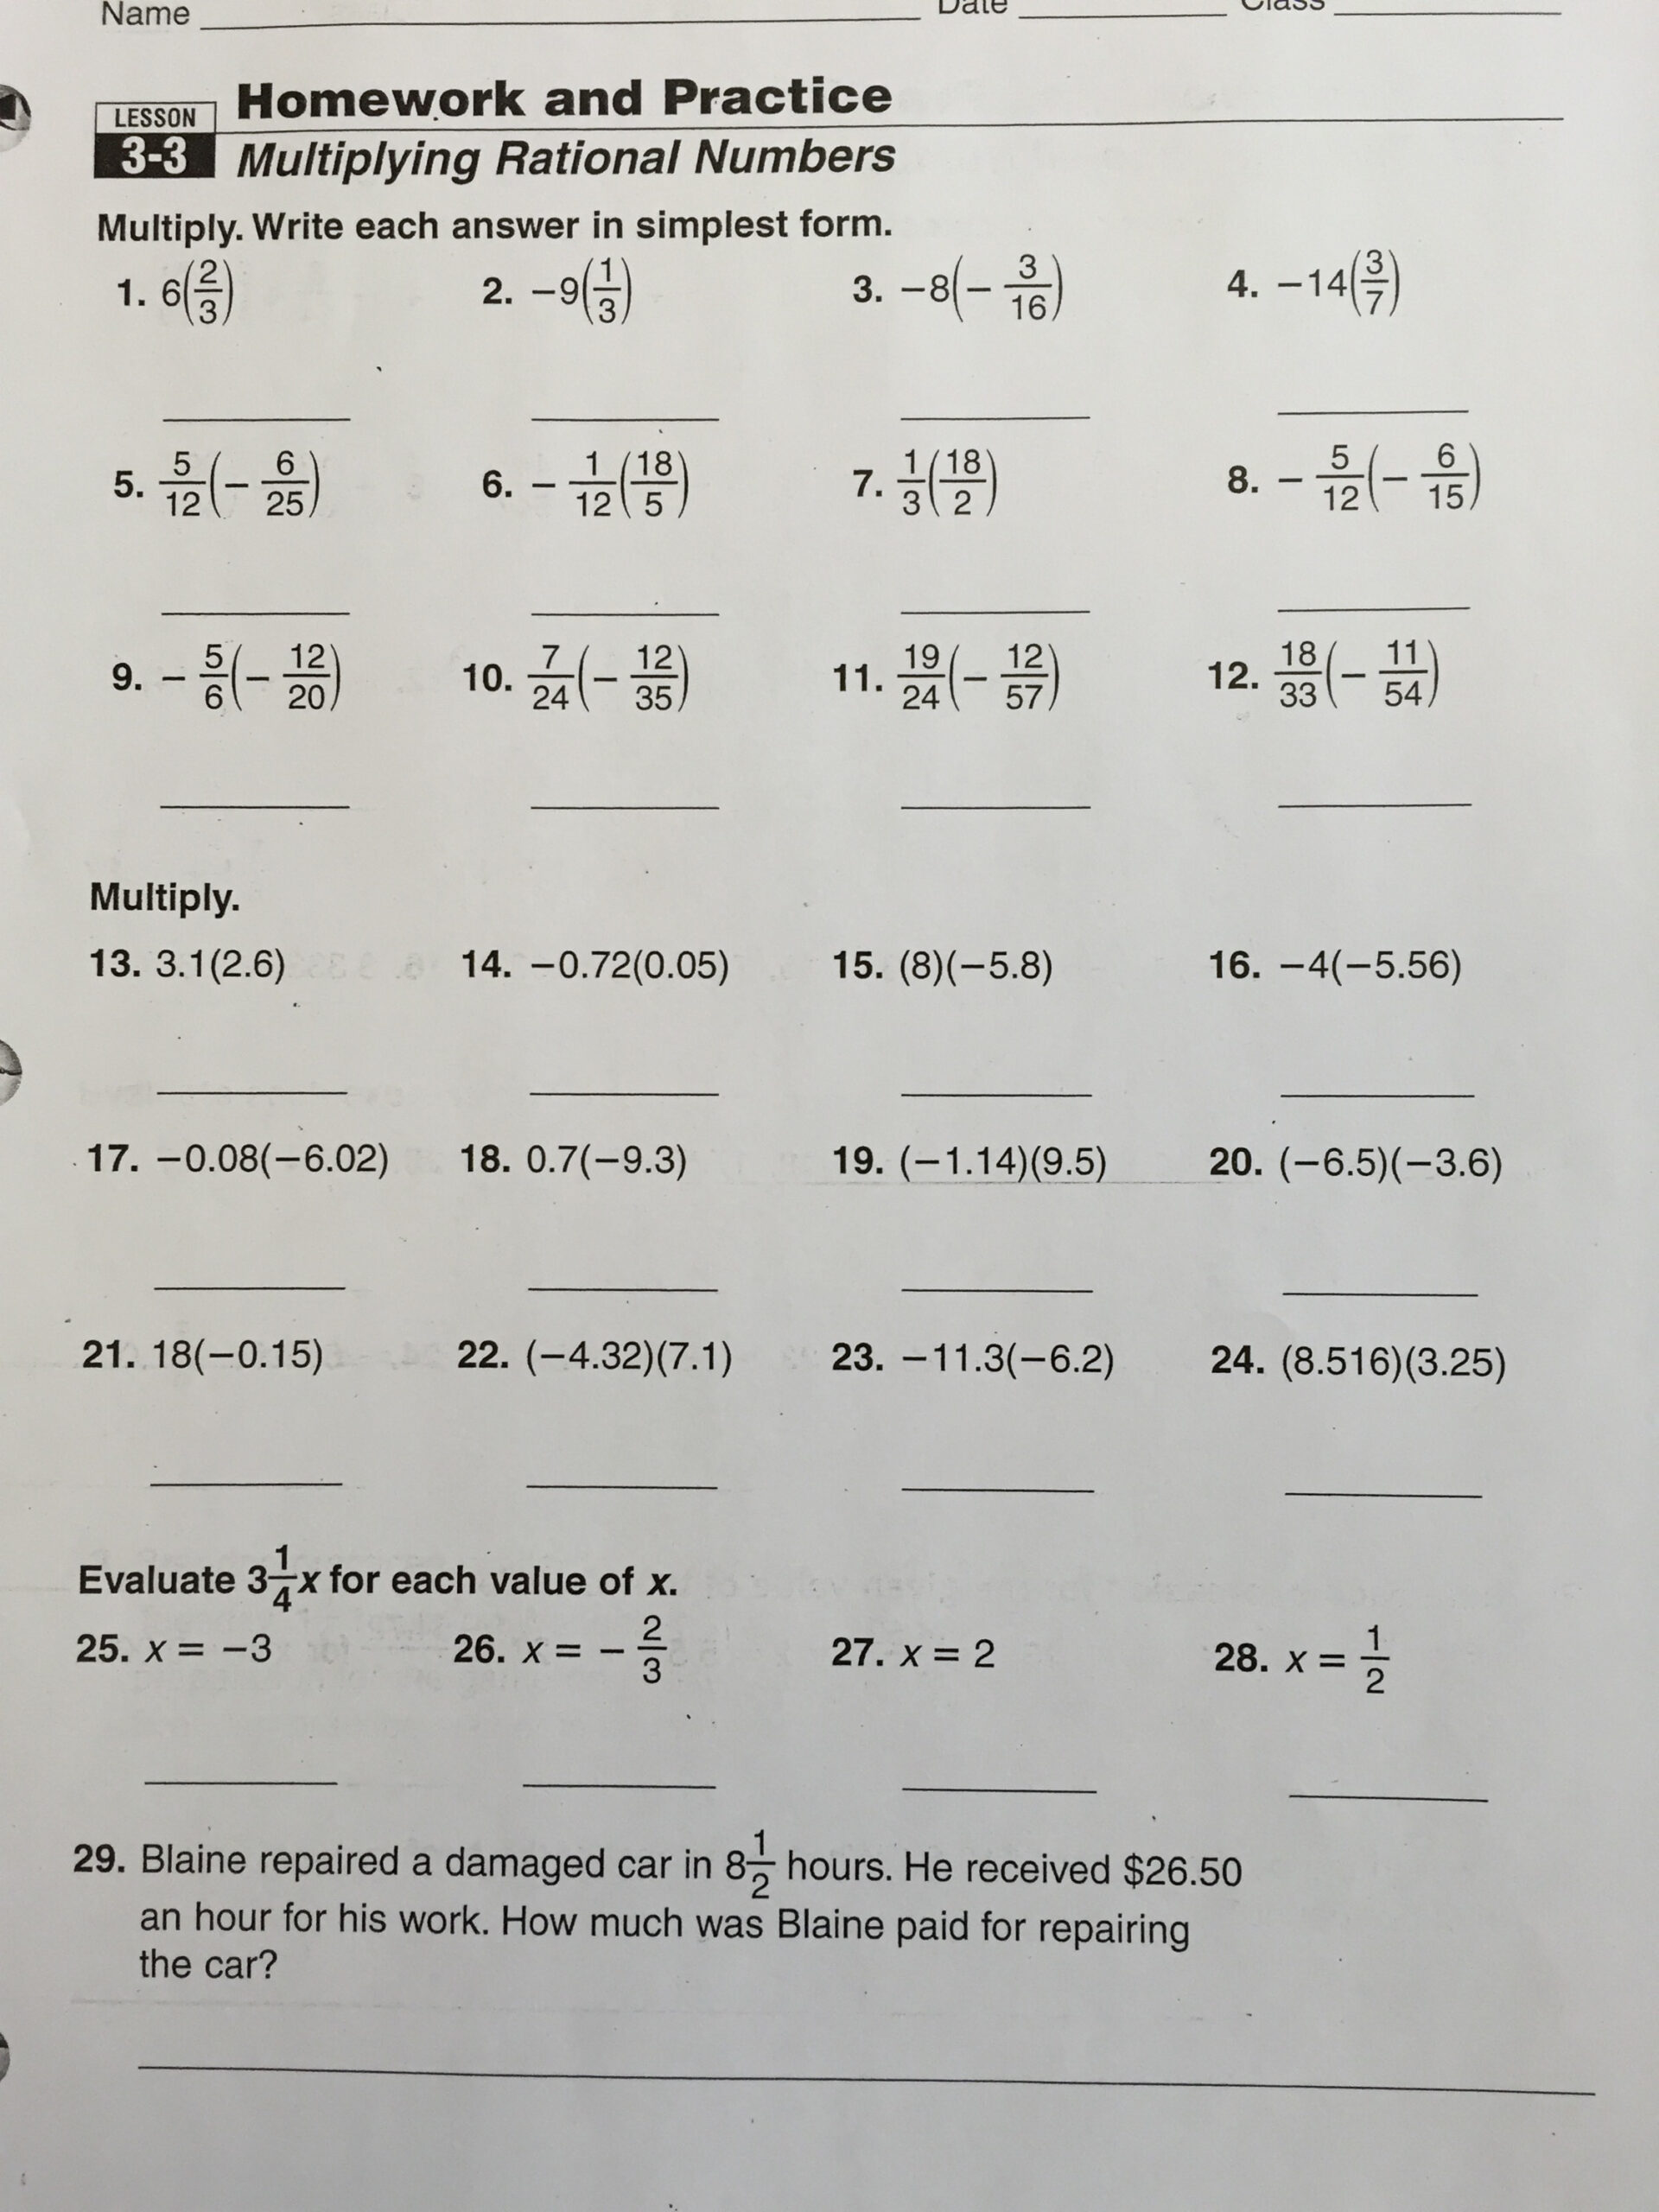 unit 5 lesson 2 homework answer key